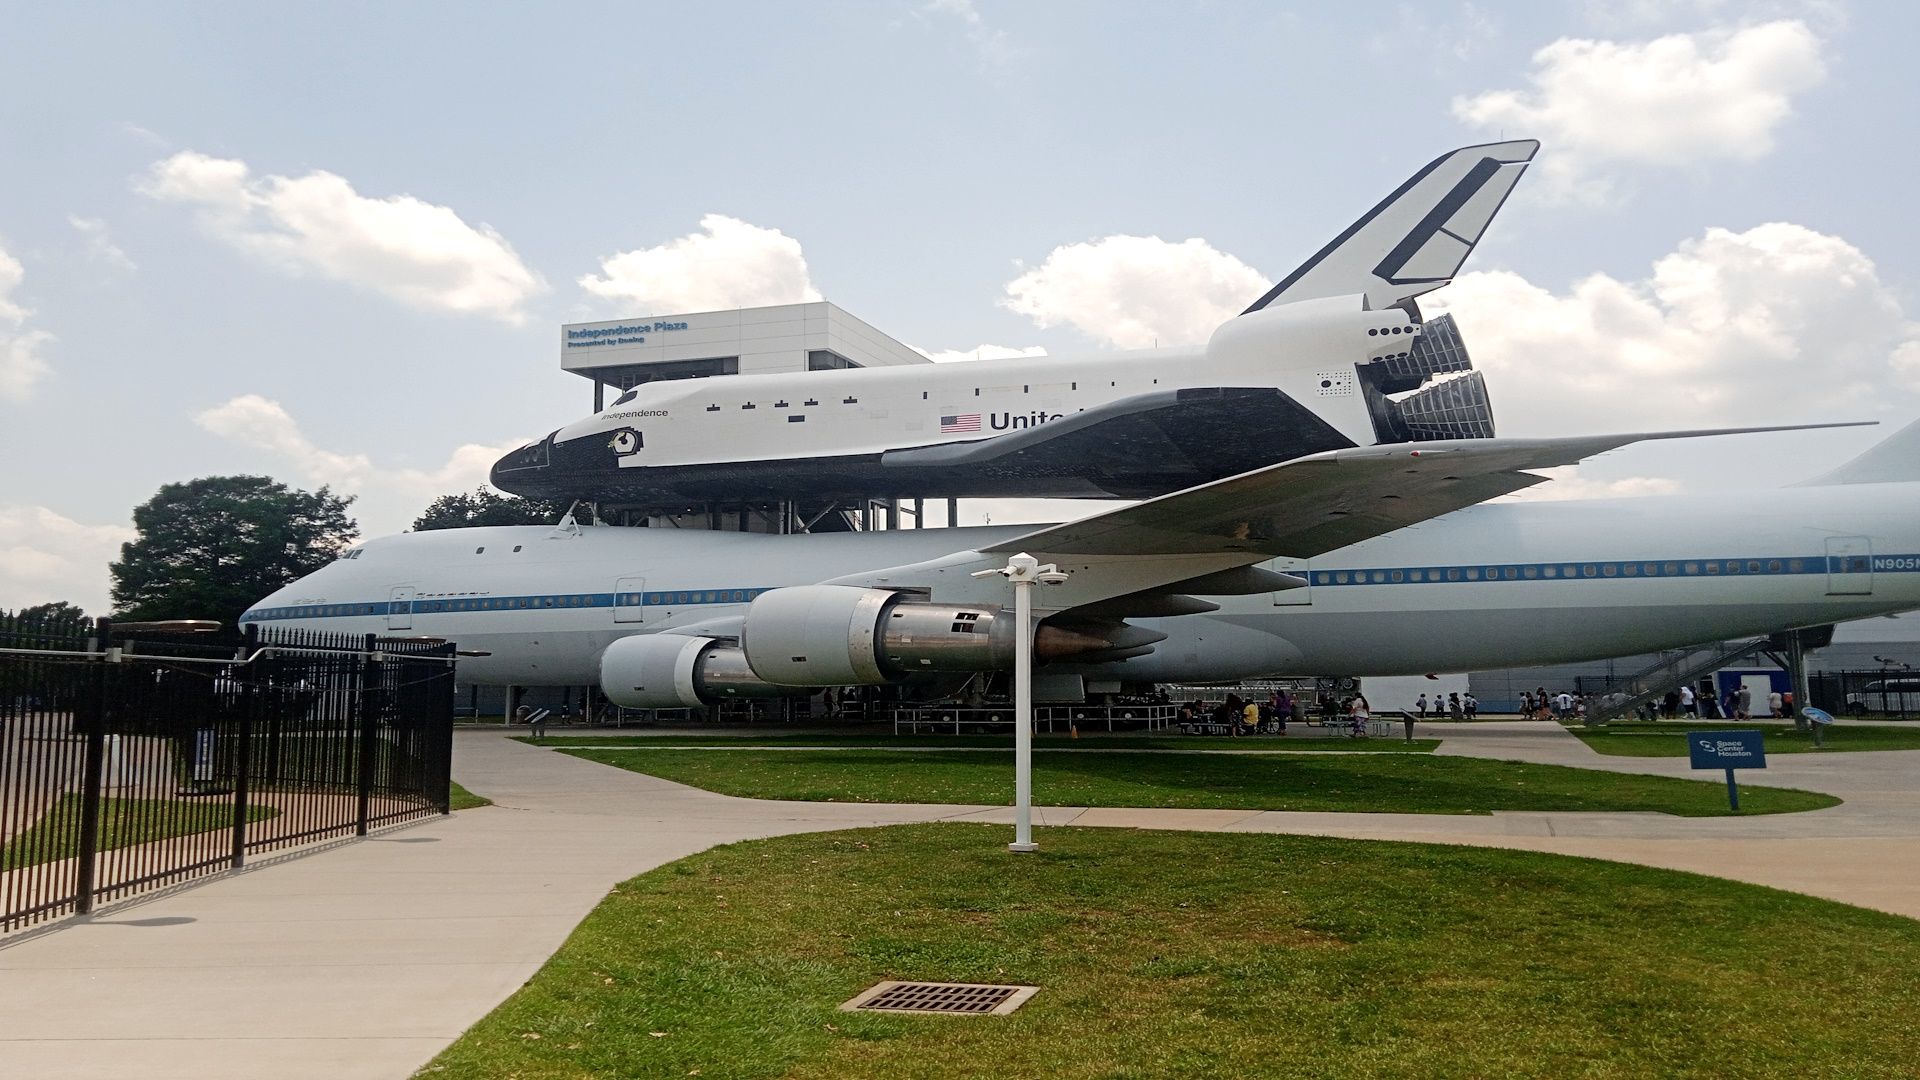 houston space center space shuttle